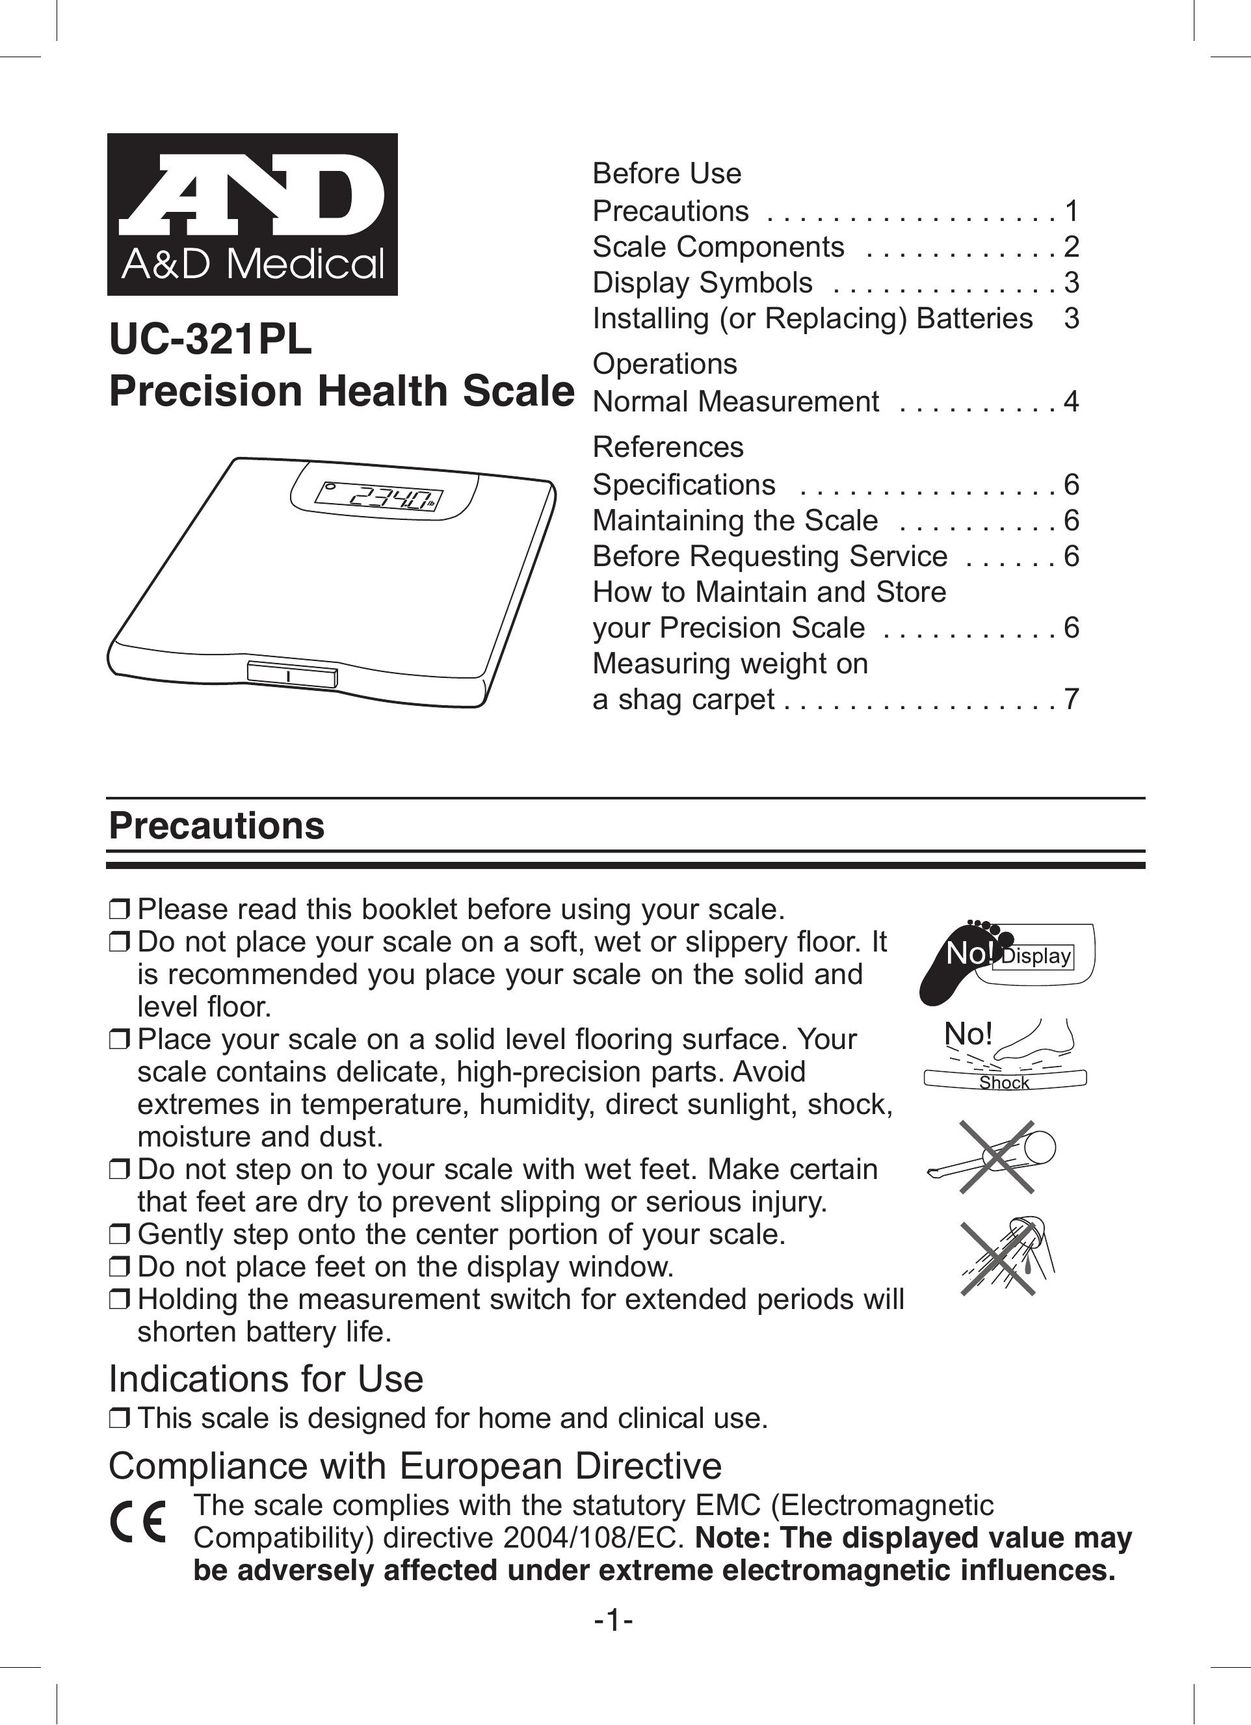 A&D UC-321PL Building Set User Manual